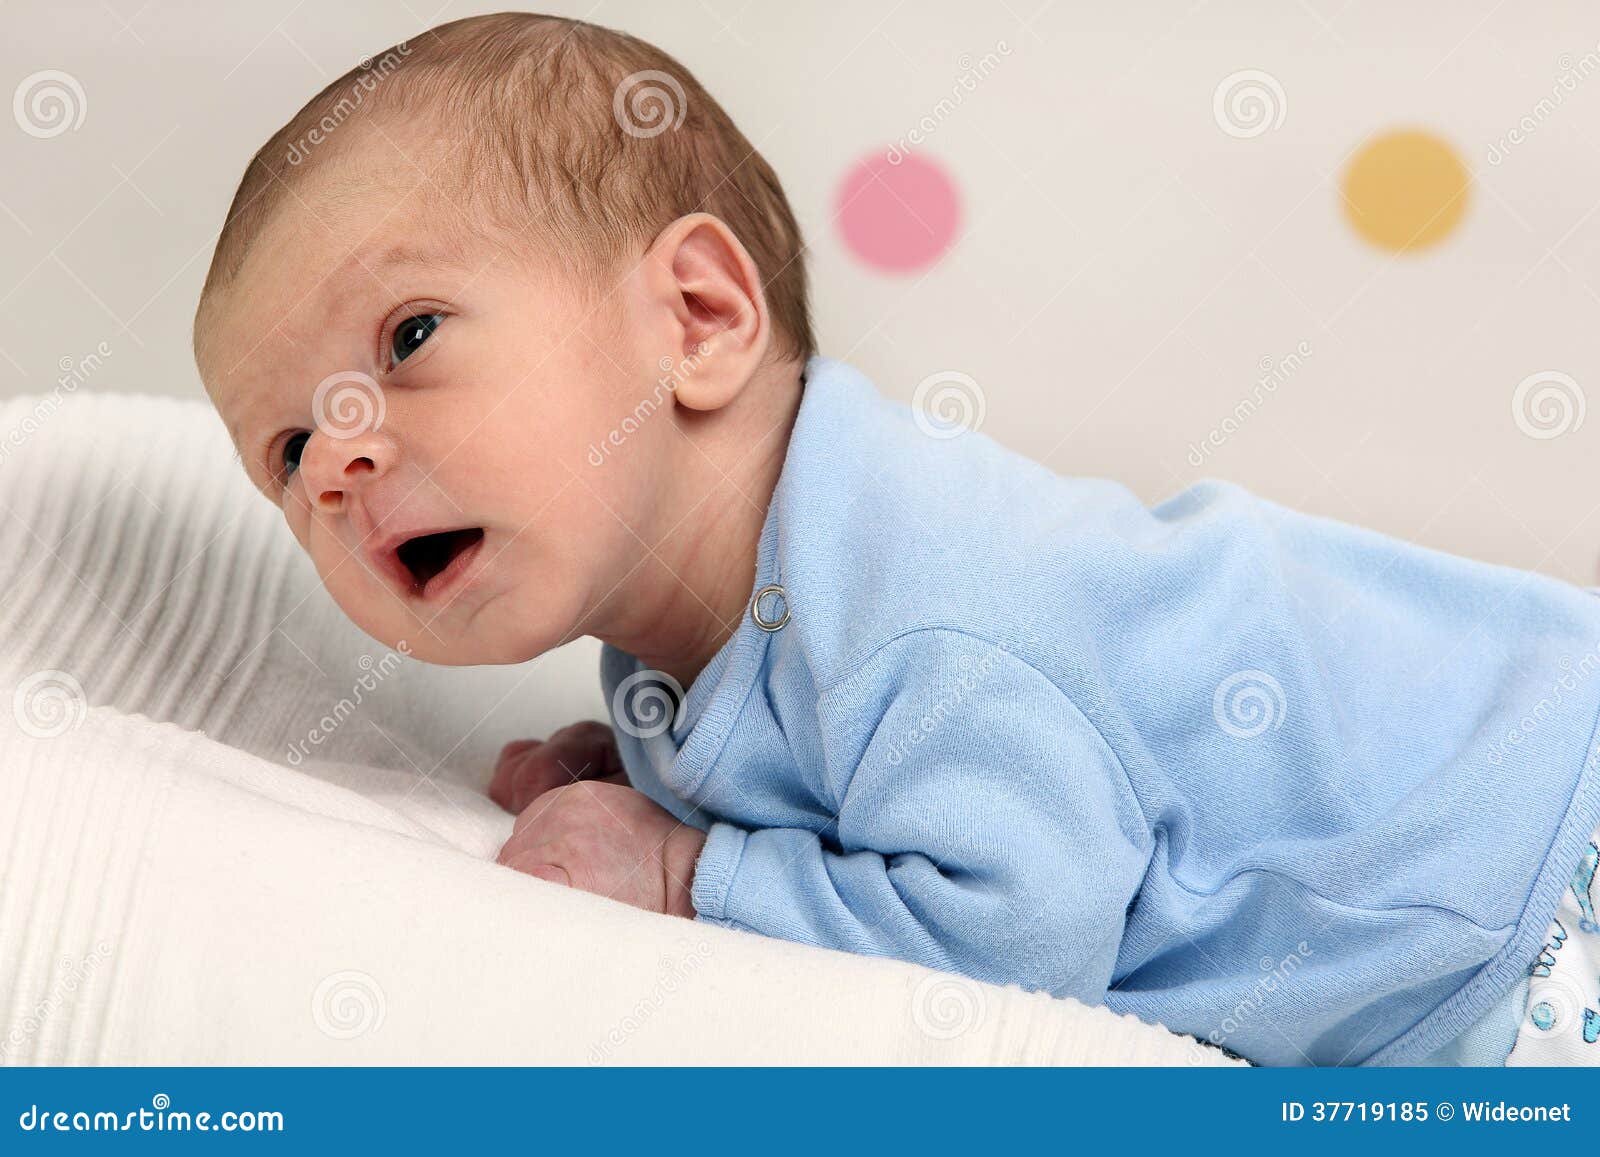 little-newborn-baby-boy-37719185.jpg